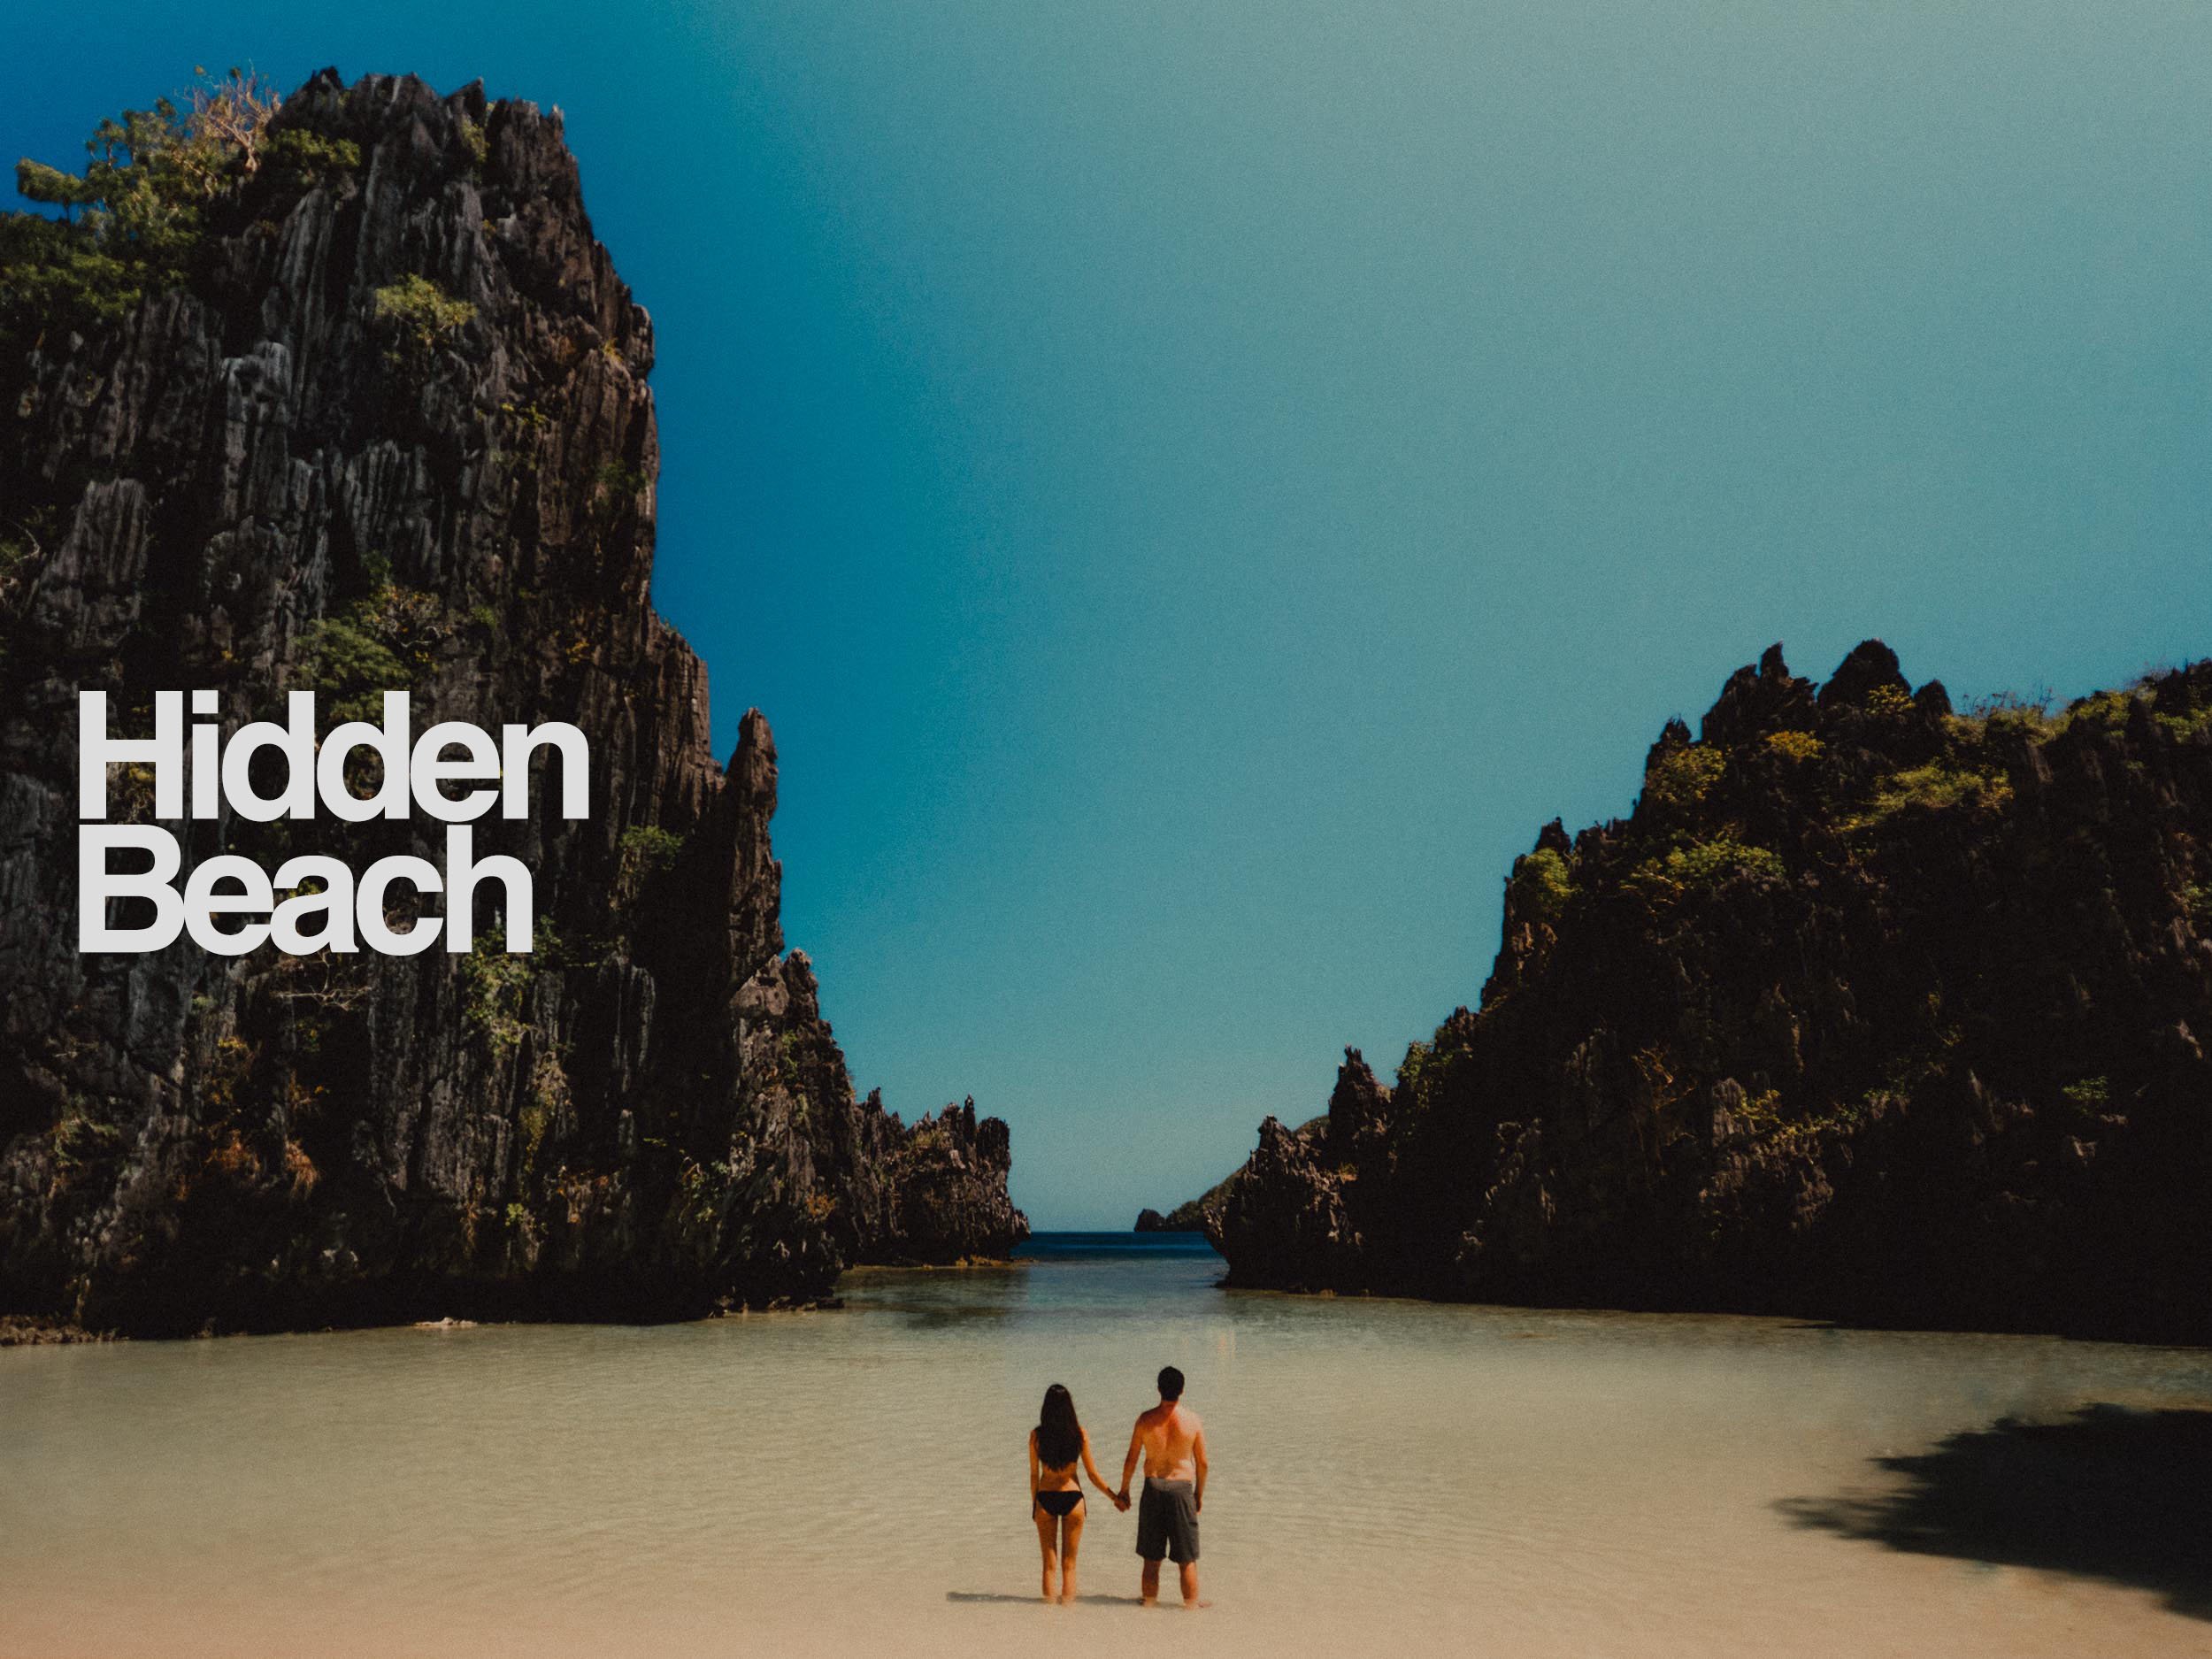 1-Hidden Beach El Nido Palawan Philippines-Honeymoon adventure couple photo shoot in Hidden Beach, Matinloc Island, El Nido, Palawan, Philippines, Southeast Asia, March 2020, Sony Alpha.jpg